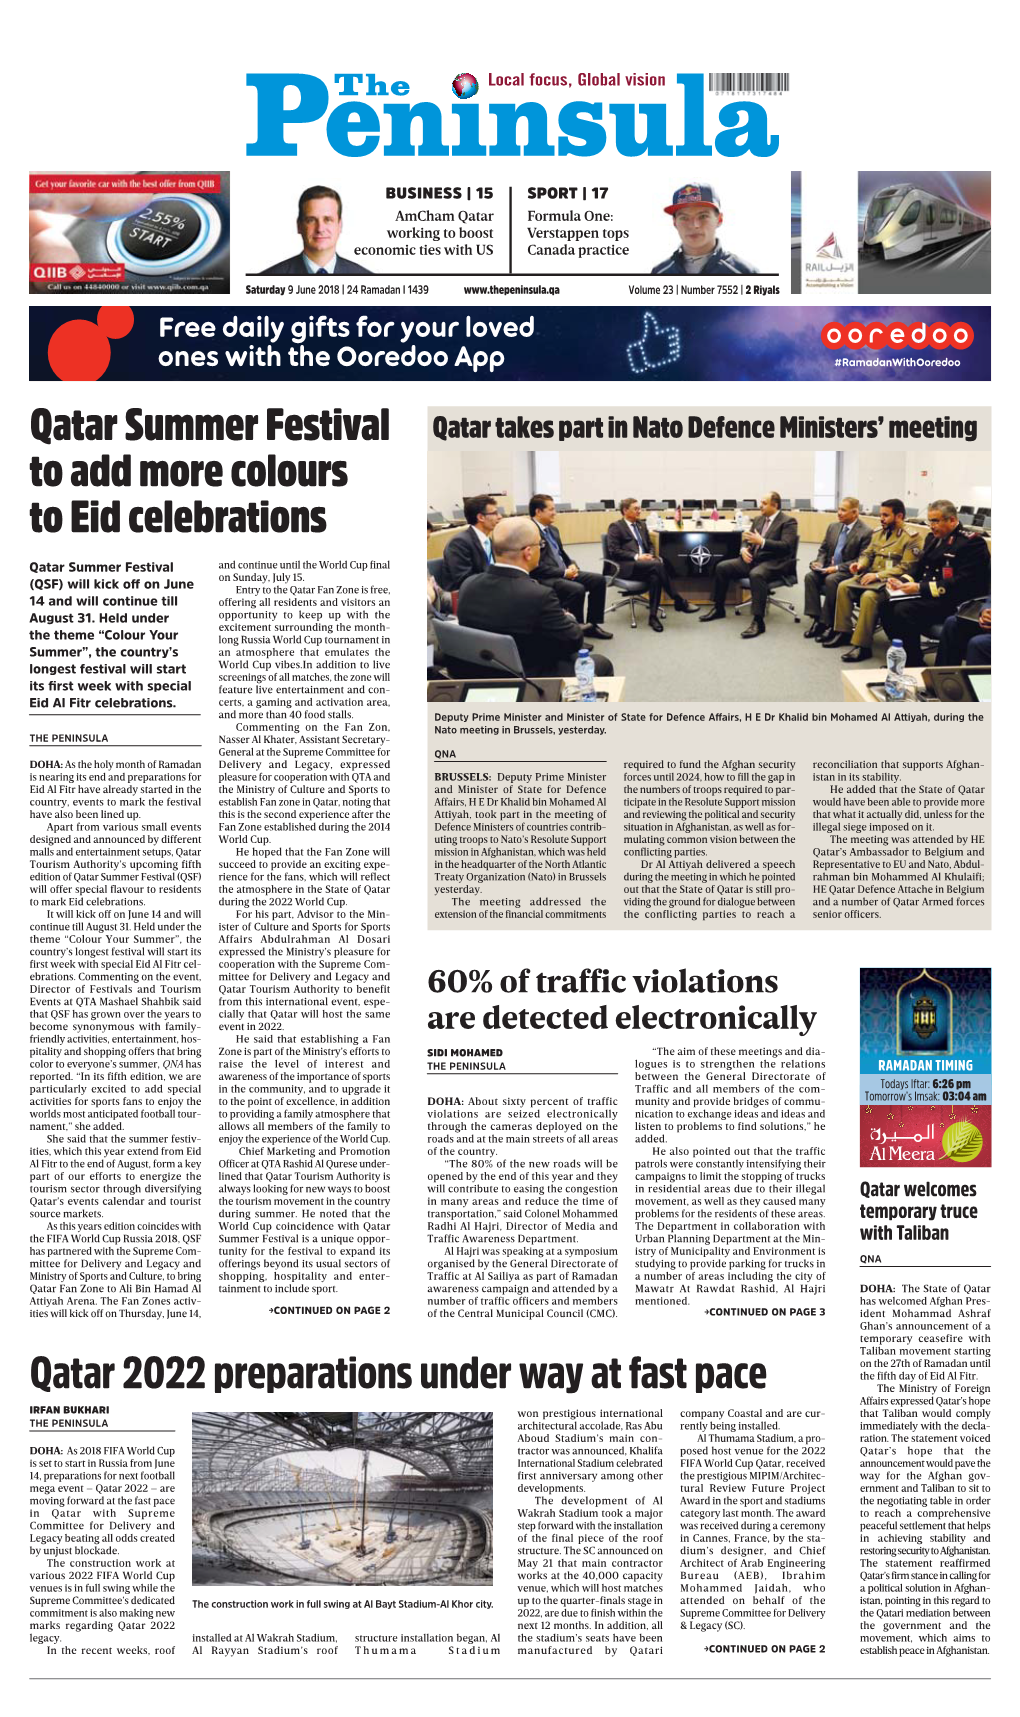 Qatar Summer Festival to Add More Colours to Eid Celebrations Qatar